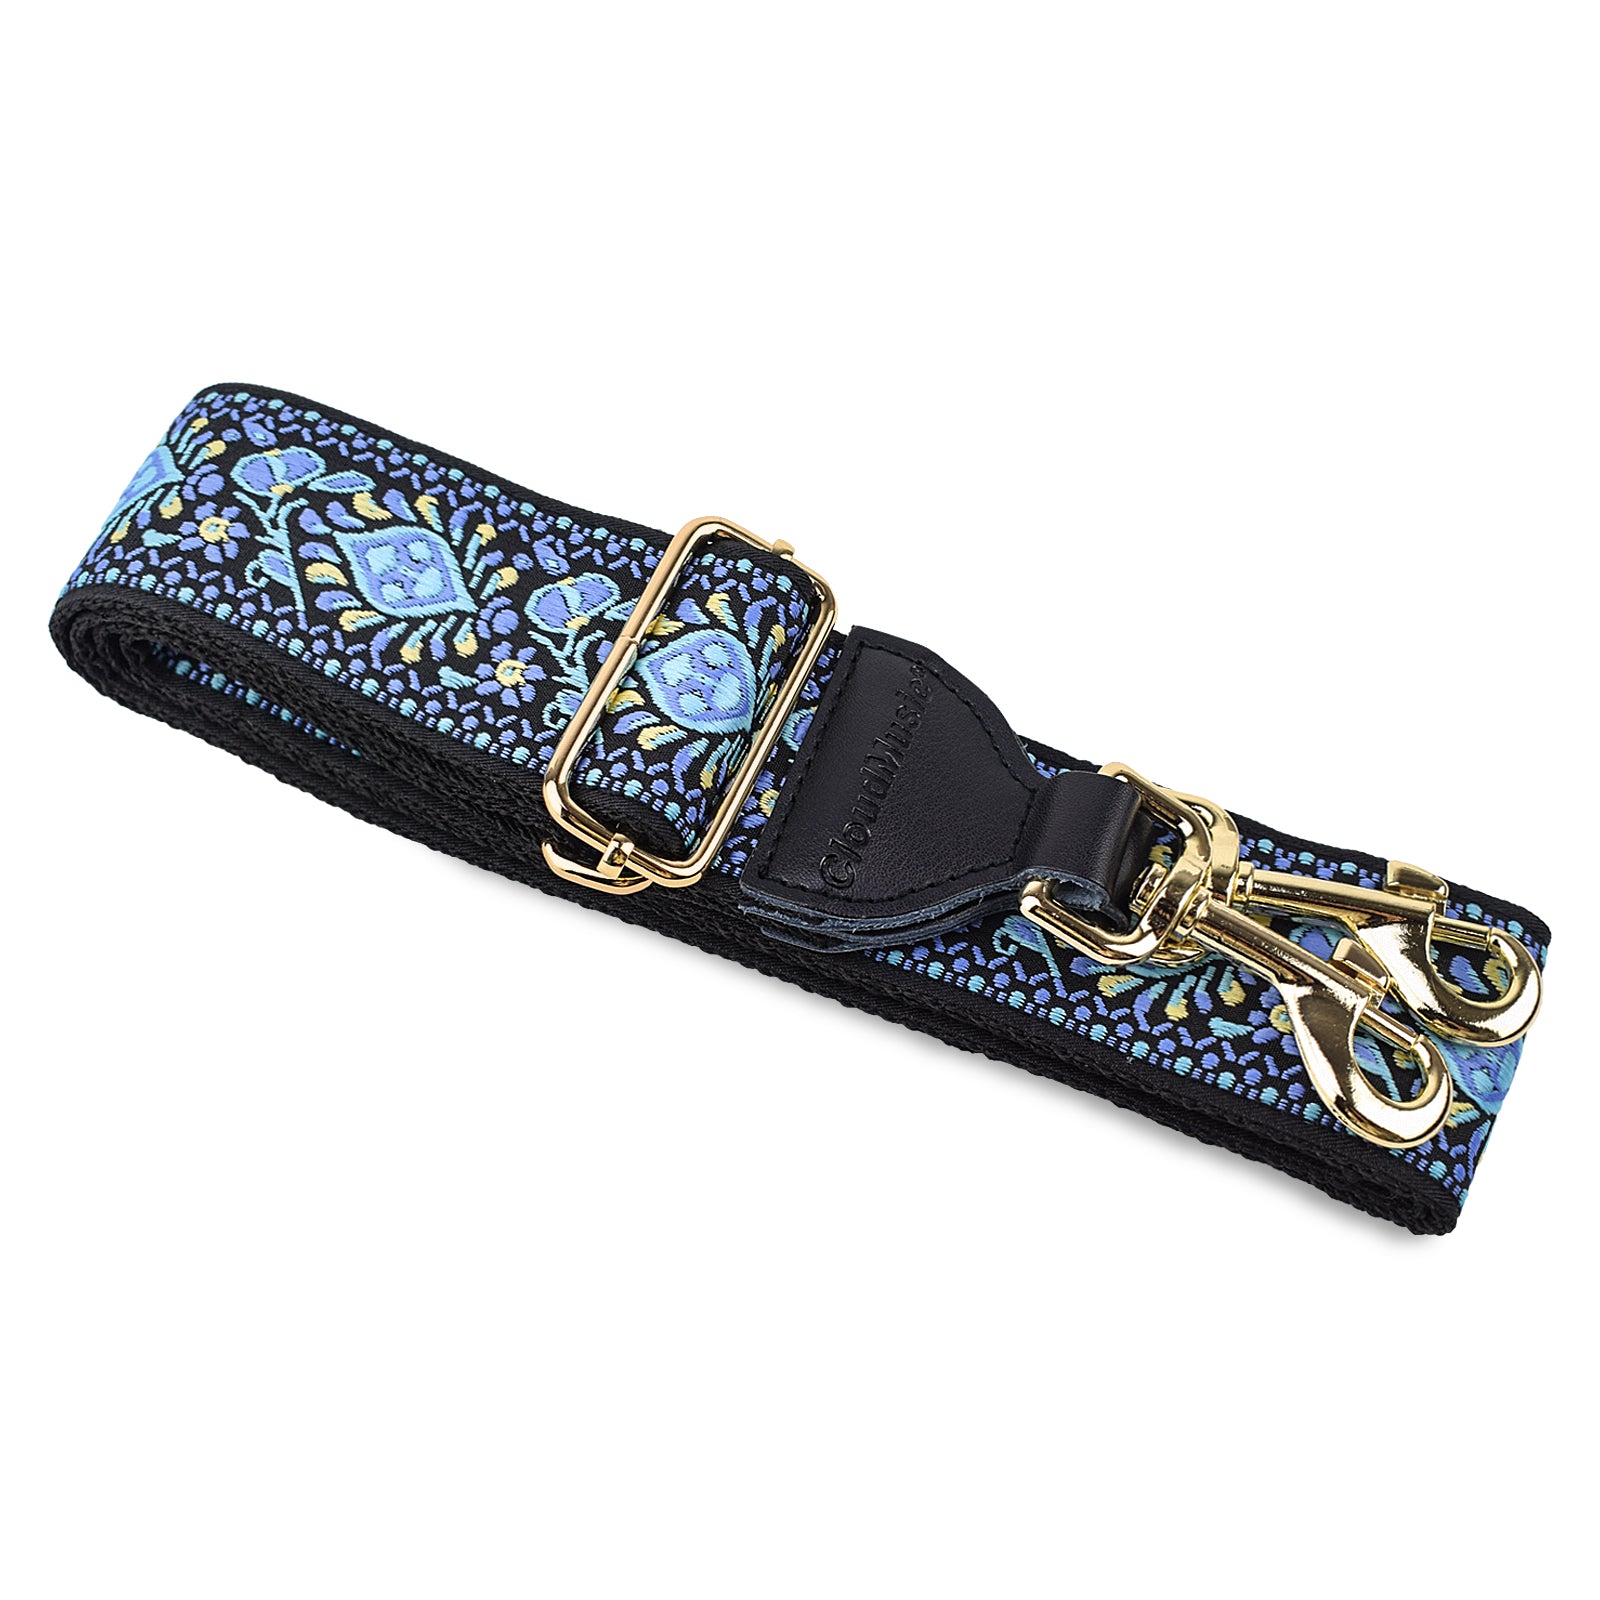 Rockstar Studded Blue Handbag Crossbody Straps Removable Beads Studs NEW